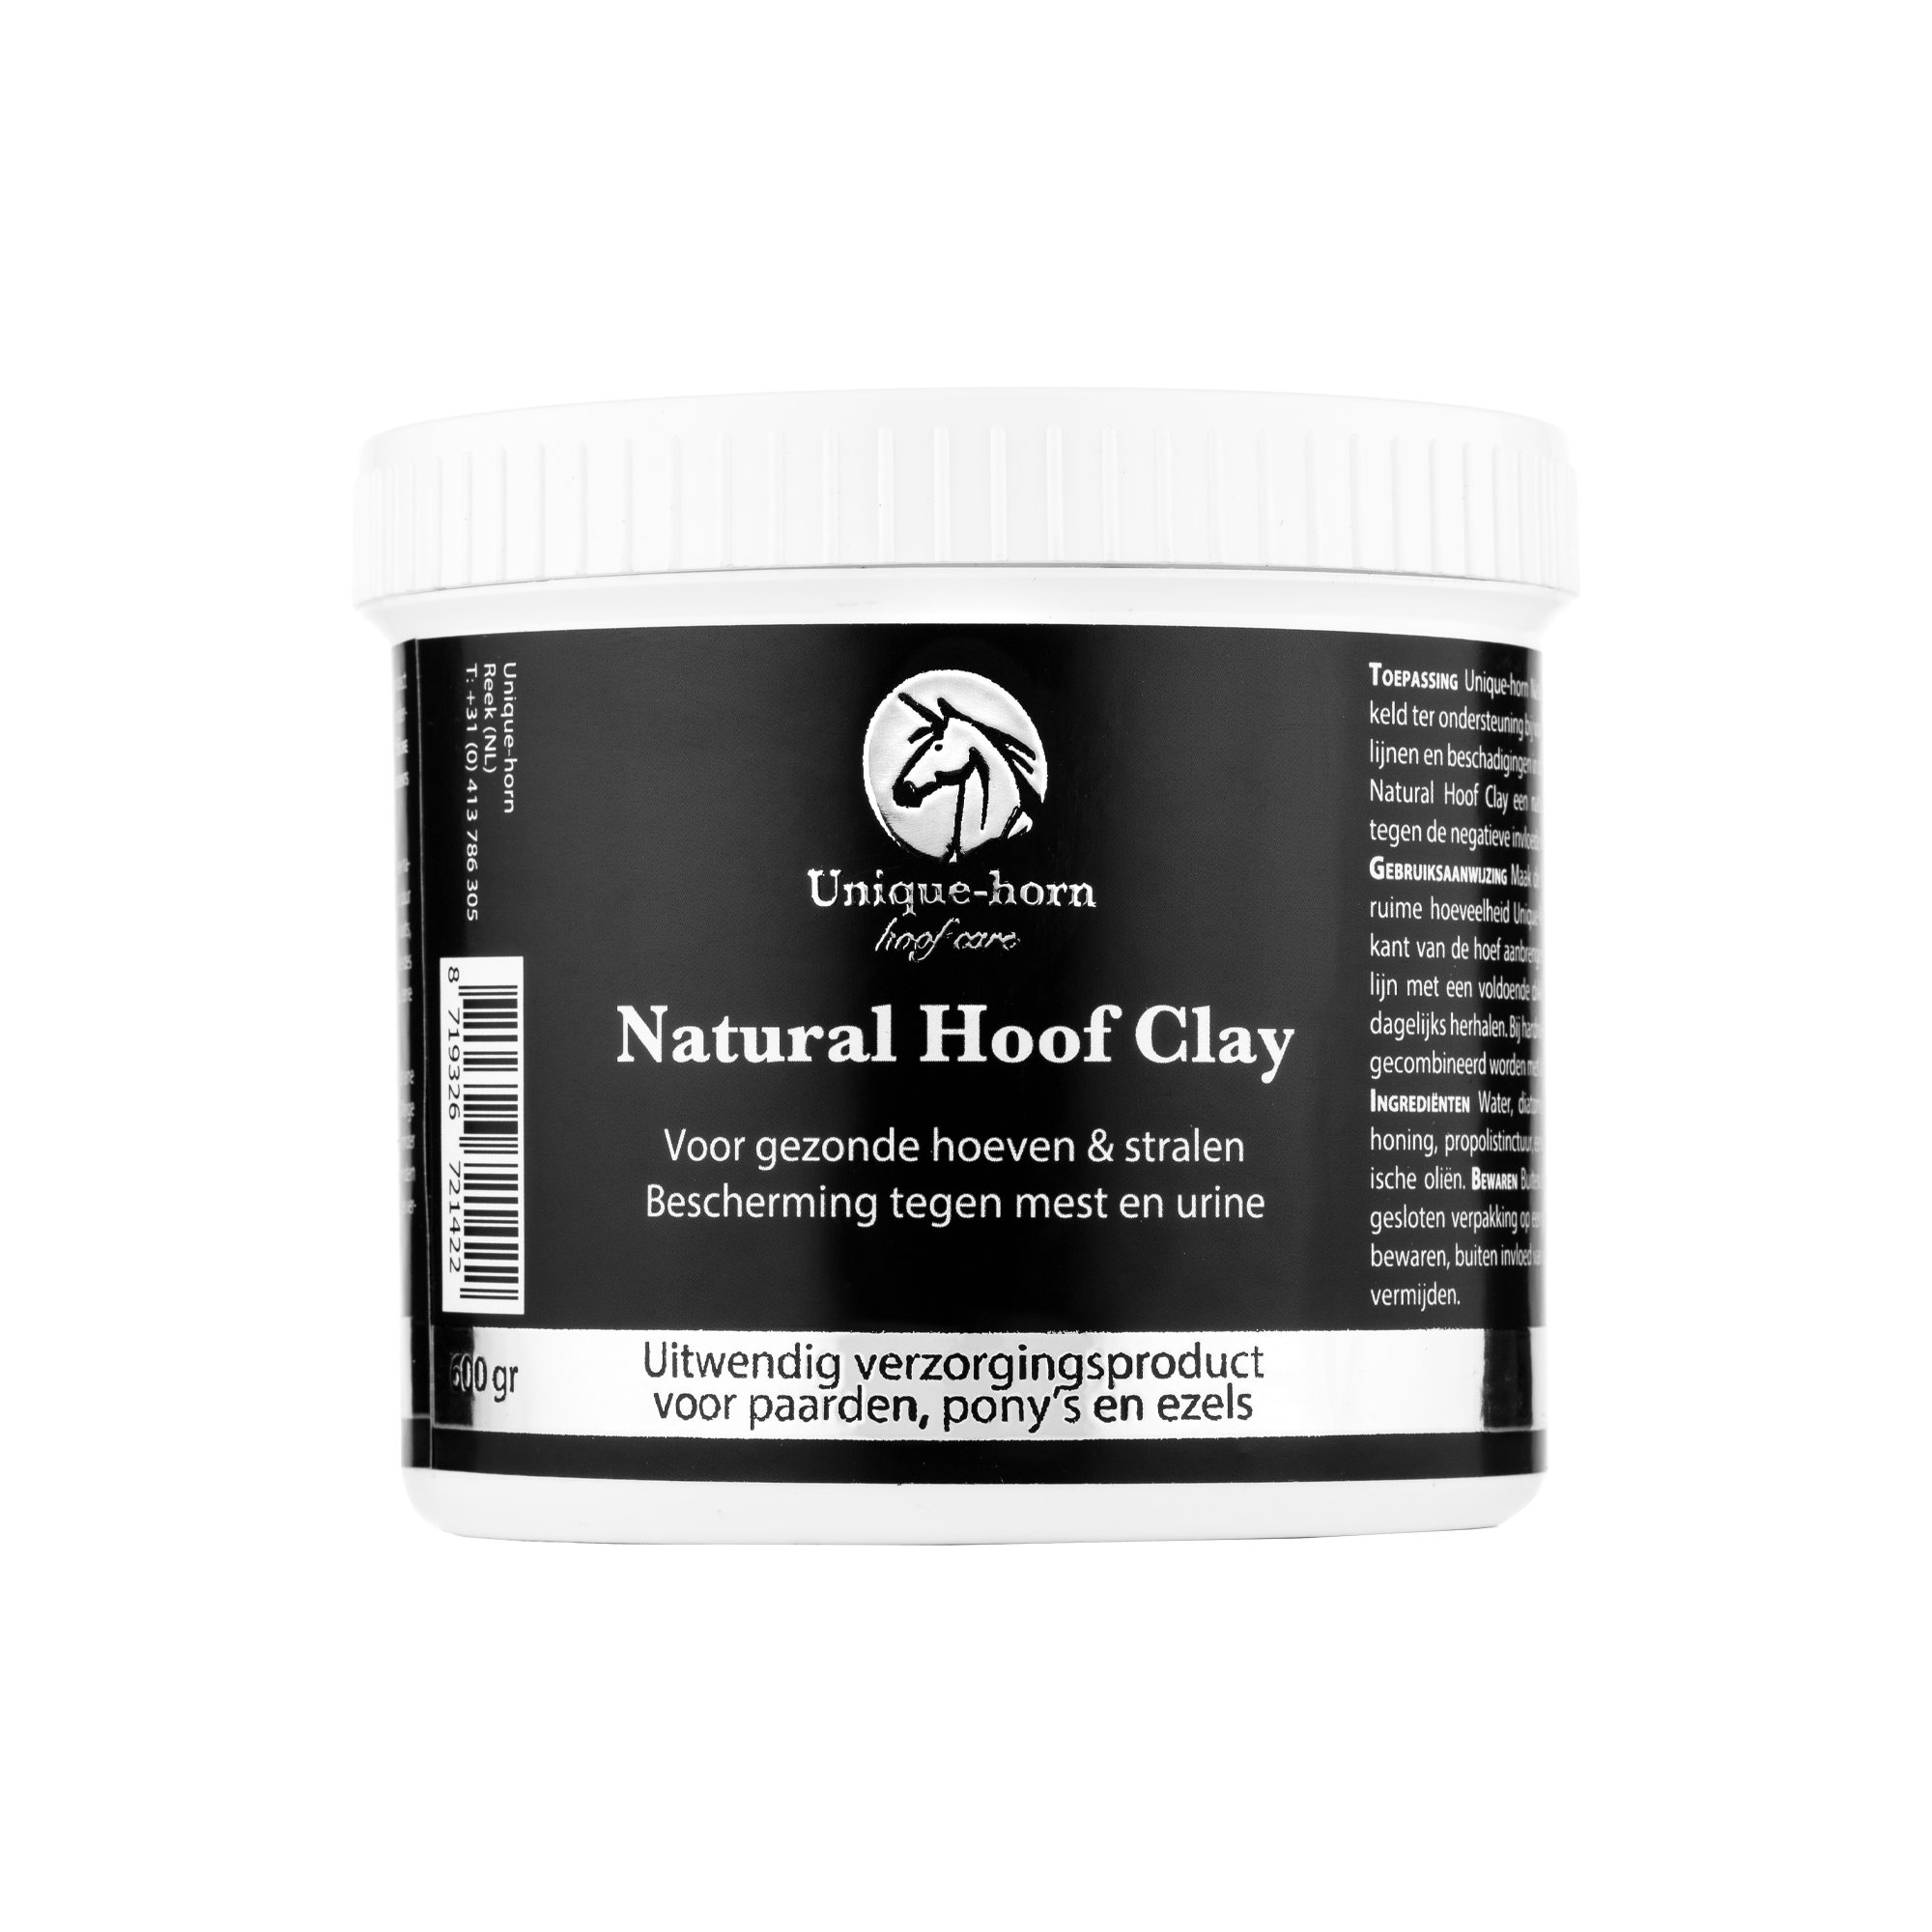 Unique-horn | Natural Hoof Clay (600g)